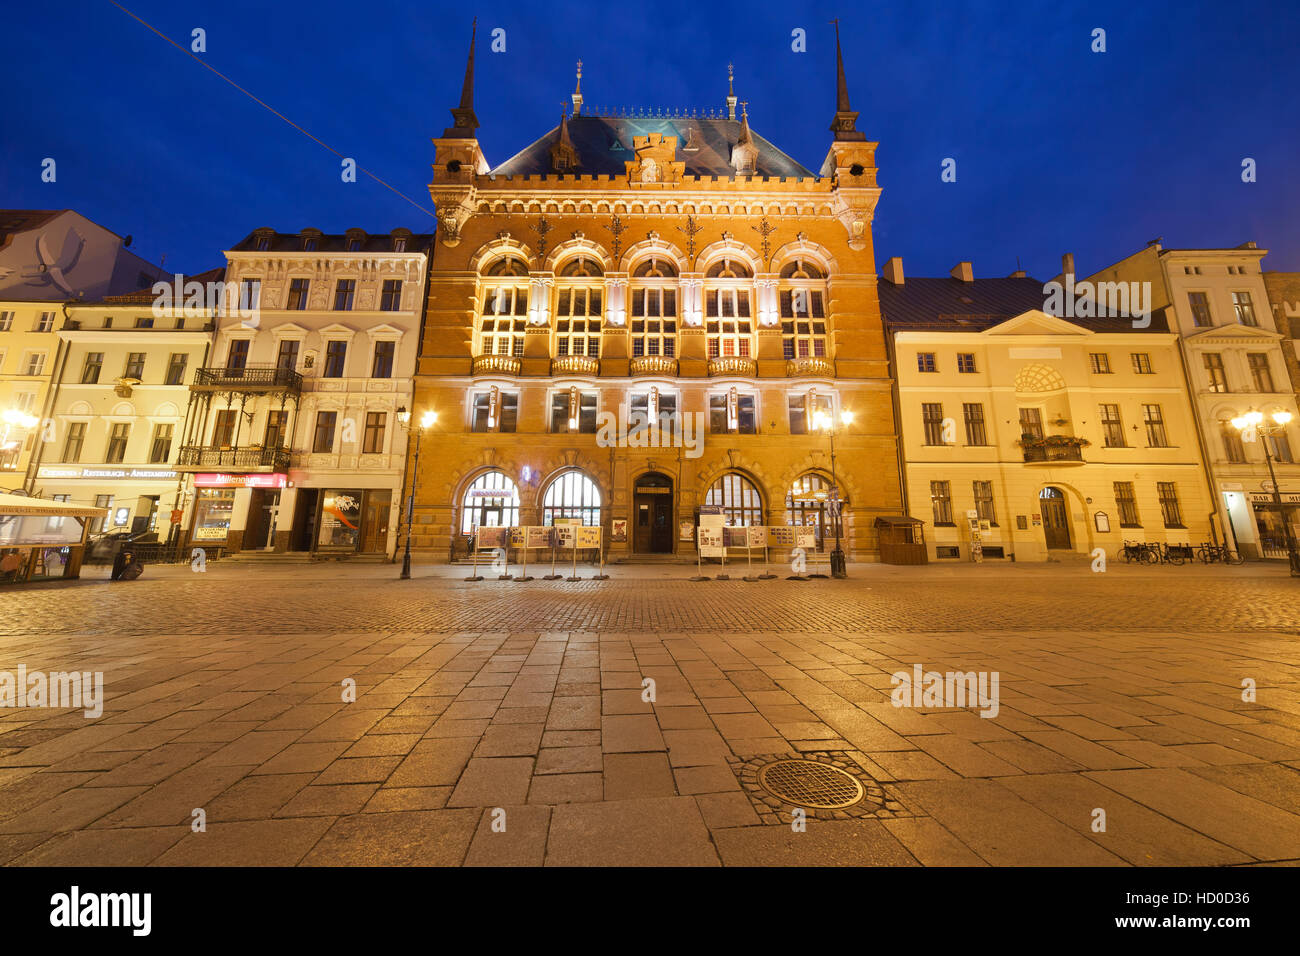 Artus Court by night at Old Town Market Square in Torun, Poland, city landmark Stock Photo